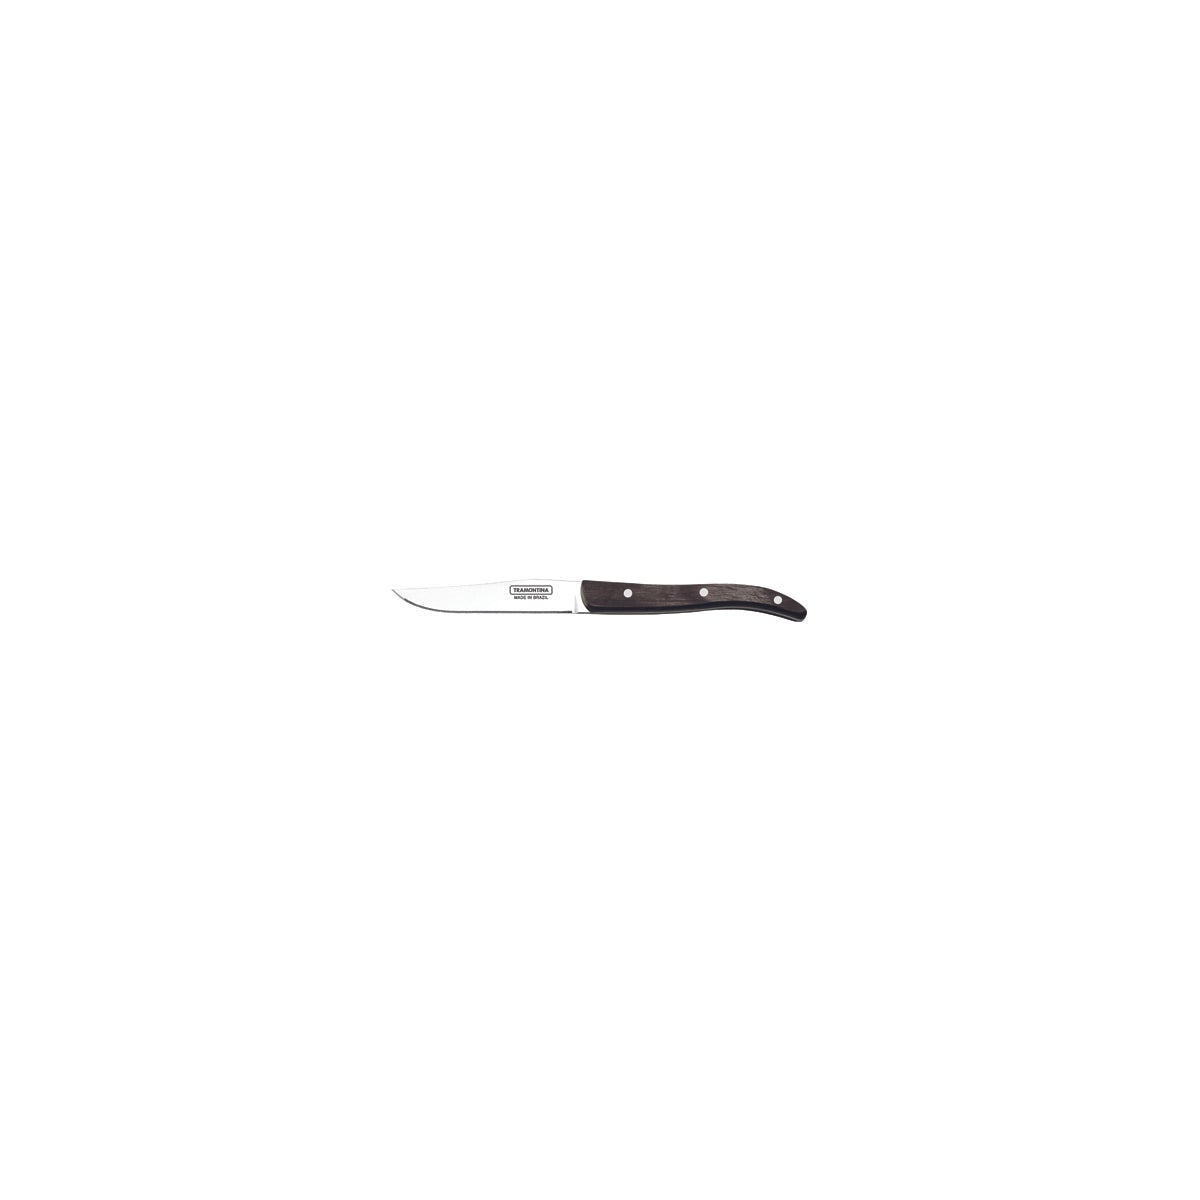 TM29810/023 Tramontina Churrasco Steak Knife Serrated Narrow Blade with Polywood Handle Brown 102mm Tomkin Australia Hospitality Supplies